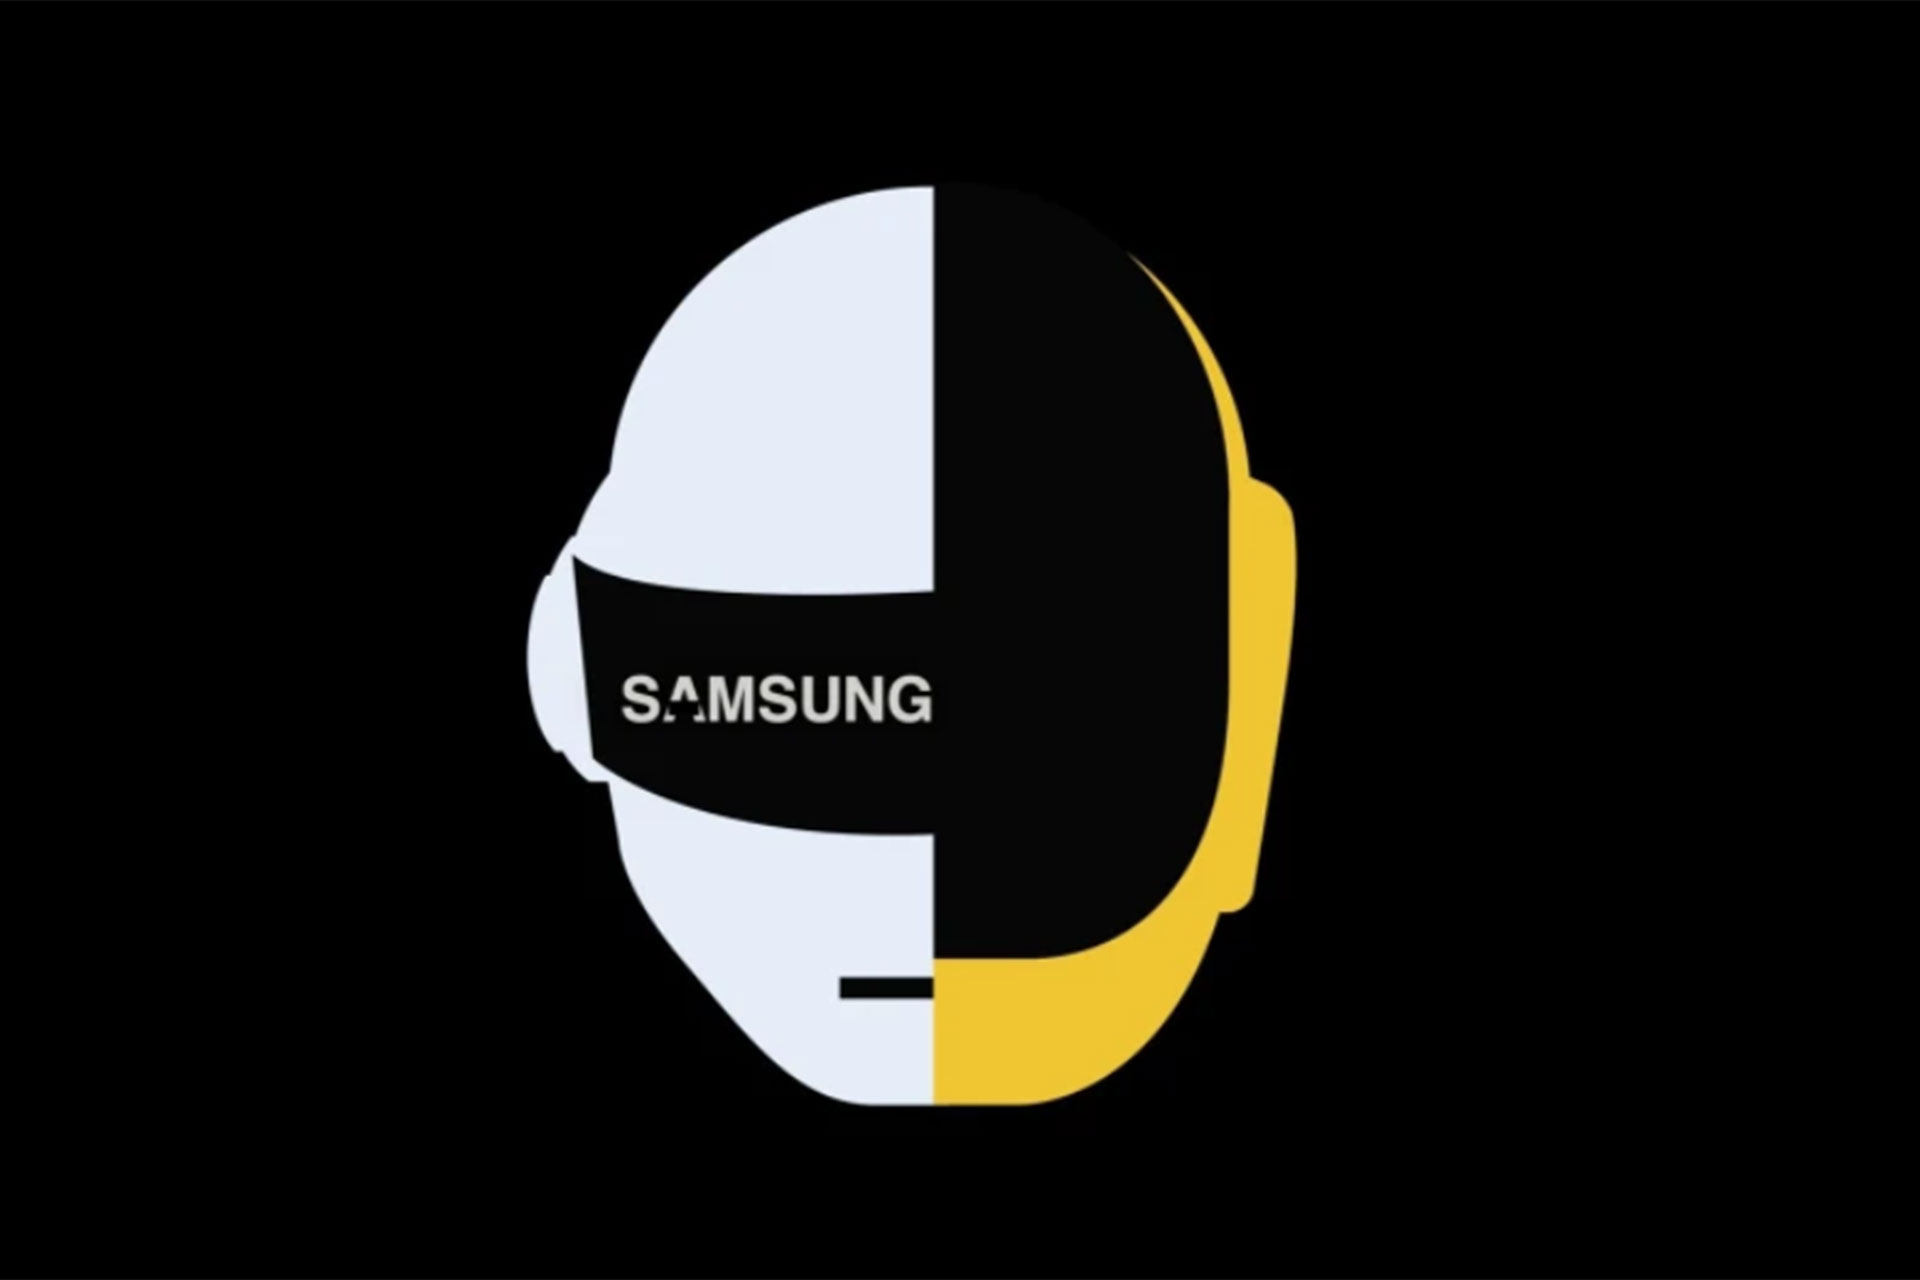 Samsung suggested logo